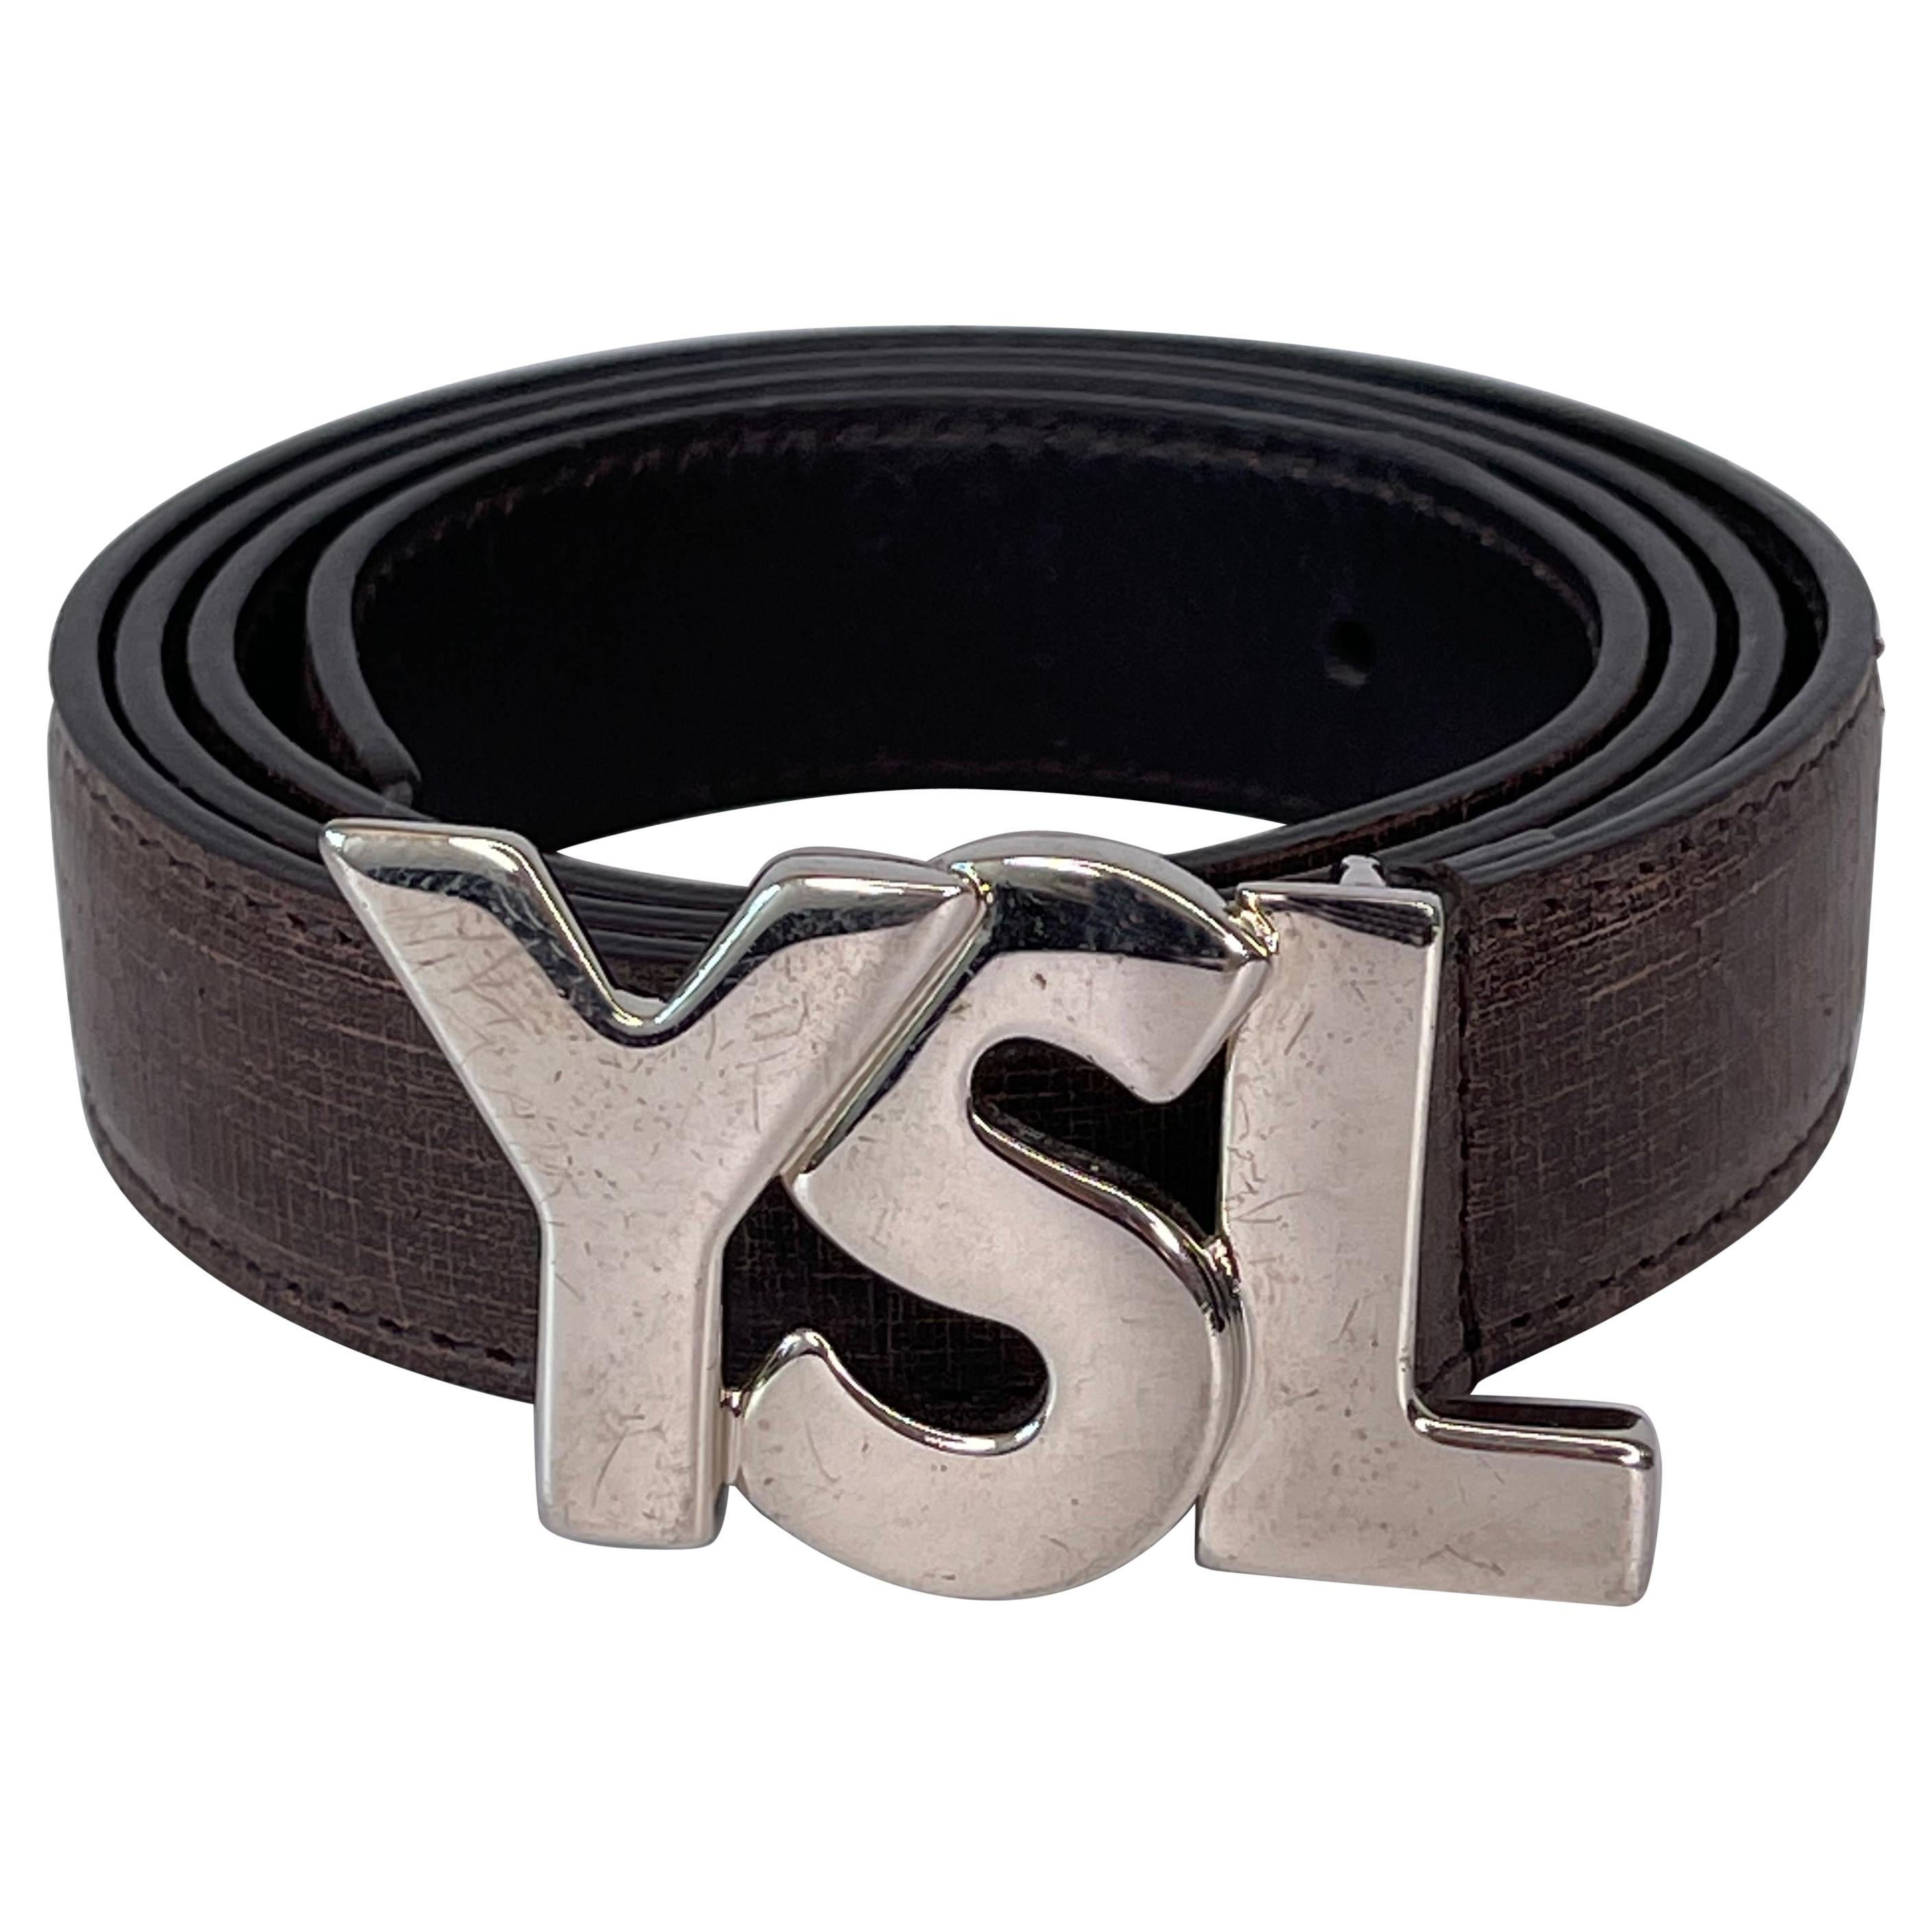 YVES SAINT-LAURENT Belt 80s Logo Buckle Red Leather Vintage